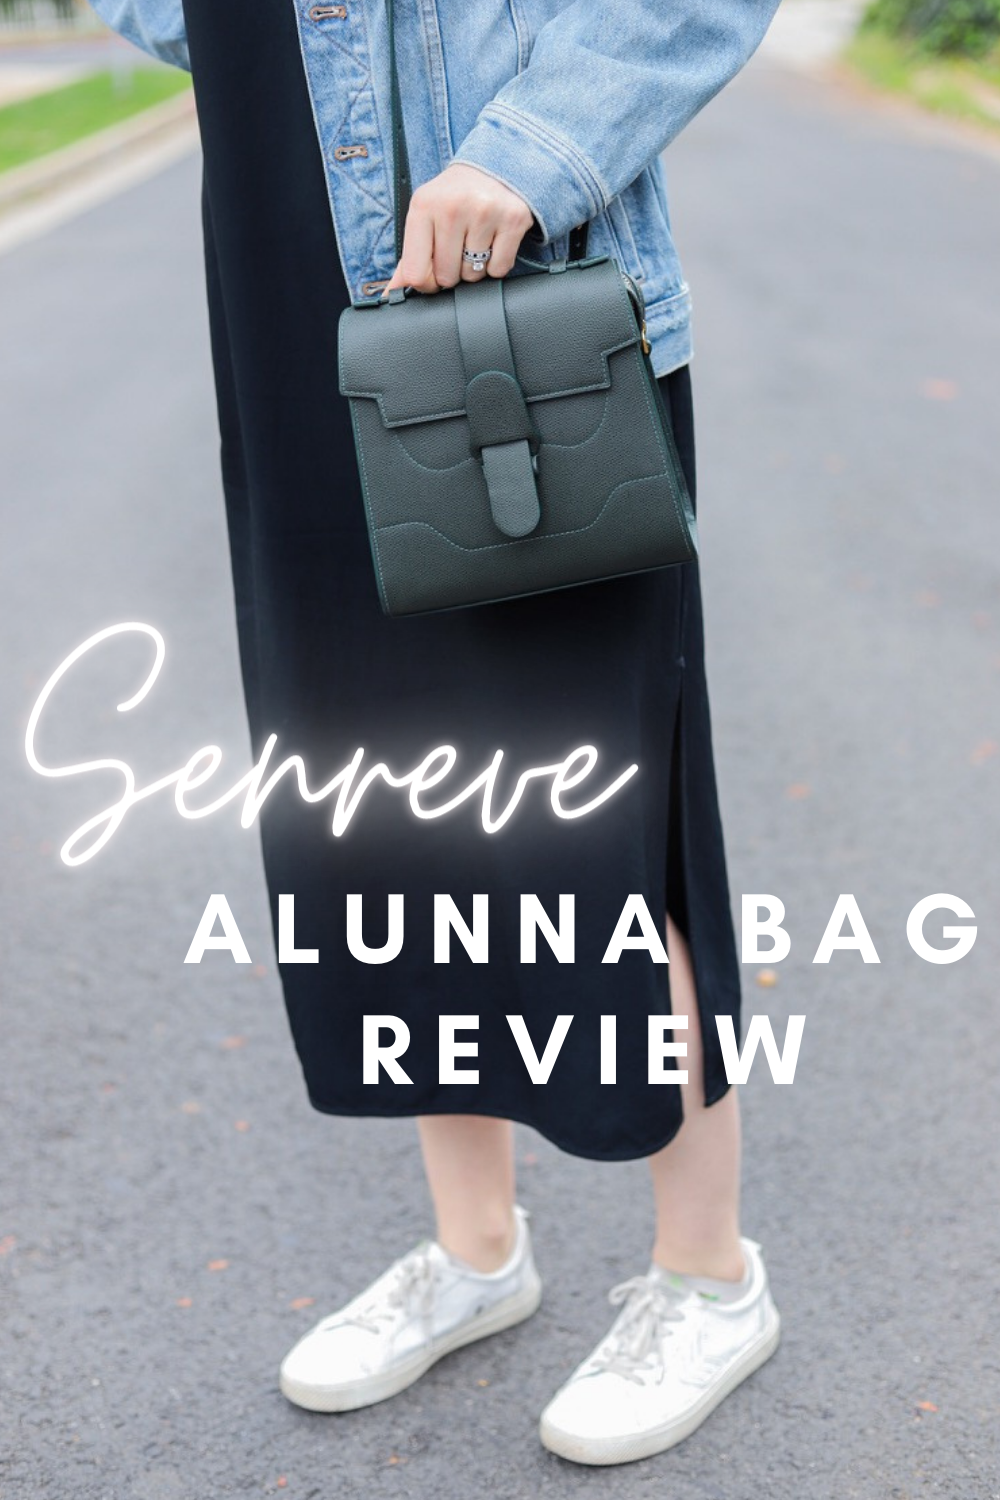 Senreve Updated Aria Belt Bag vs. the Old Version, LMents of Style